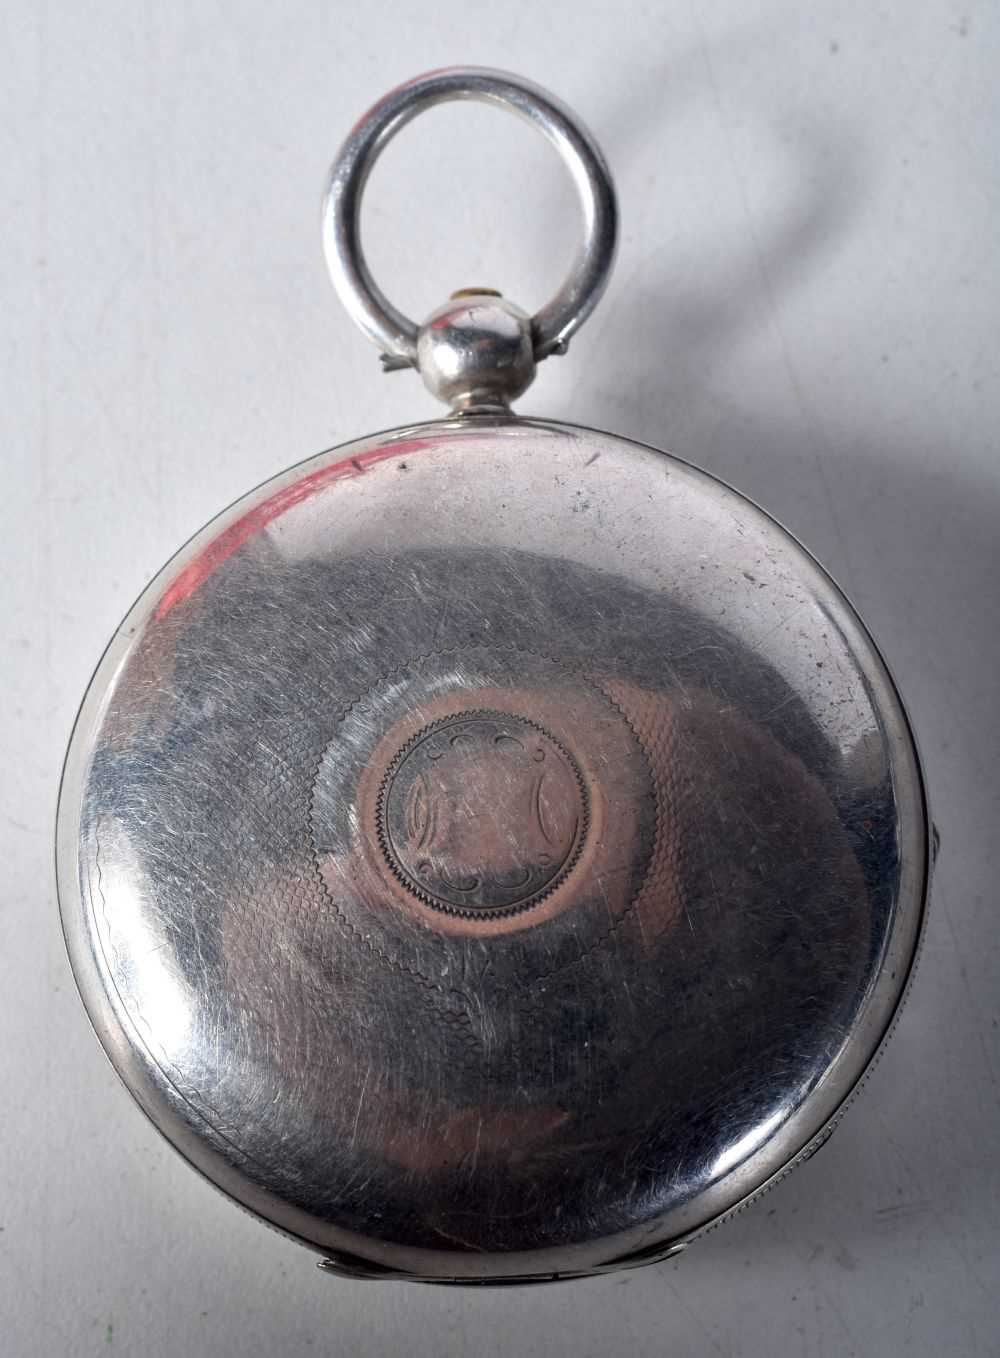 Victorian Silver Gents Open Face Pocket Watch.  Hallmarked Birmingham 1900.  Movement - Key-wind. - Image 2 of 4